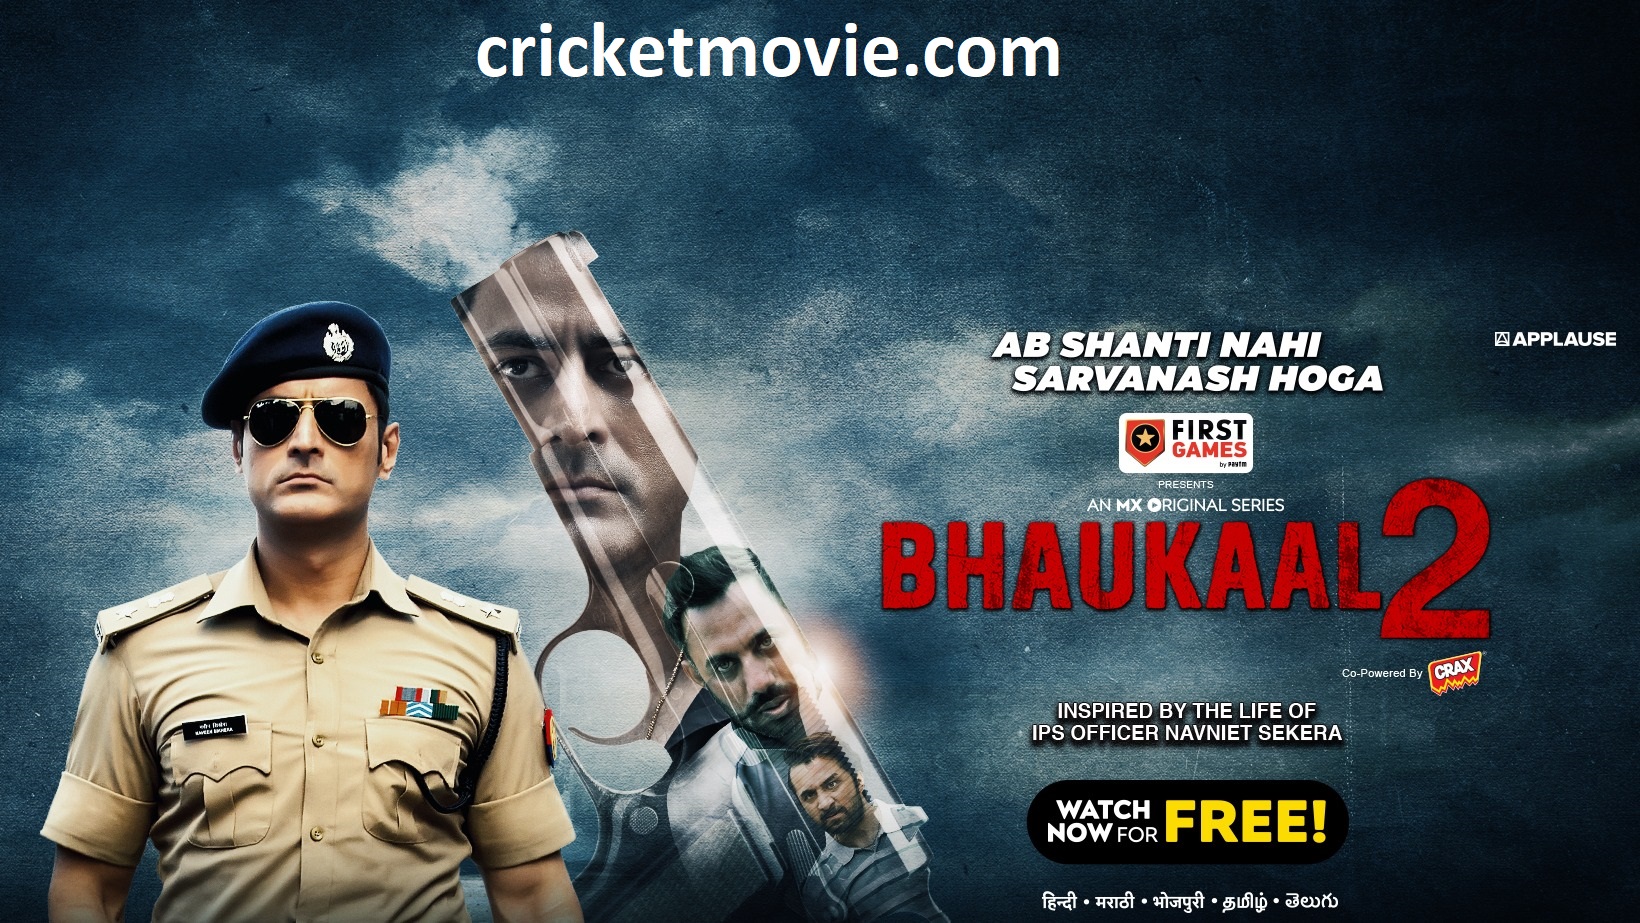 Bhaukaal 2 Review-cricketmovie.com